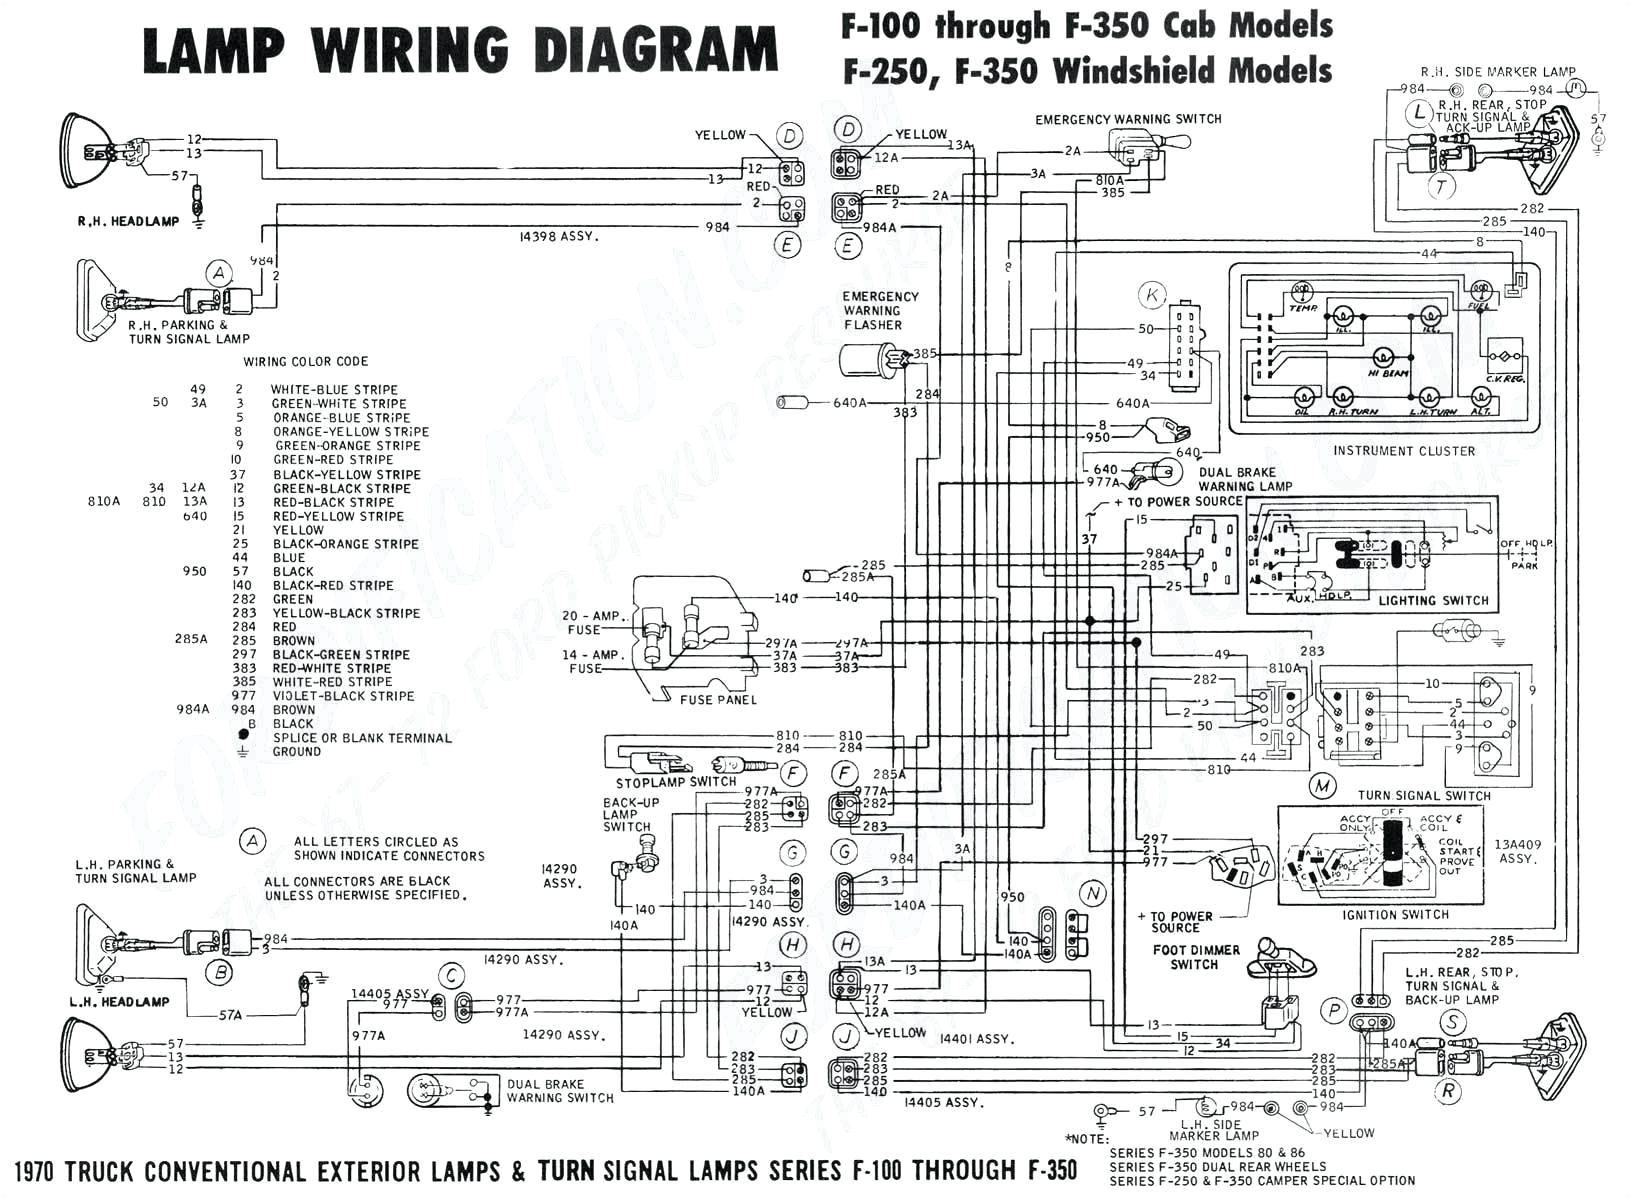 isuzu 2 8 wiring diagram wiring diagram name isuzu 2 8 wiring diagram